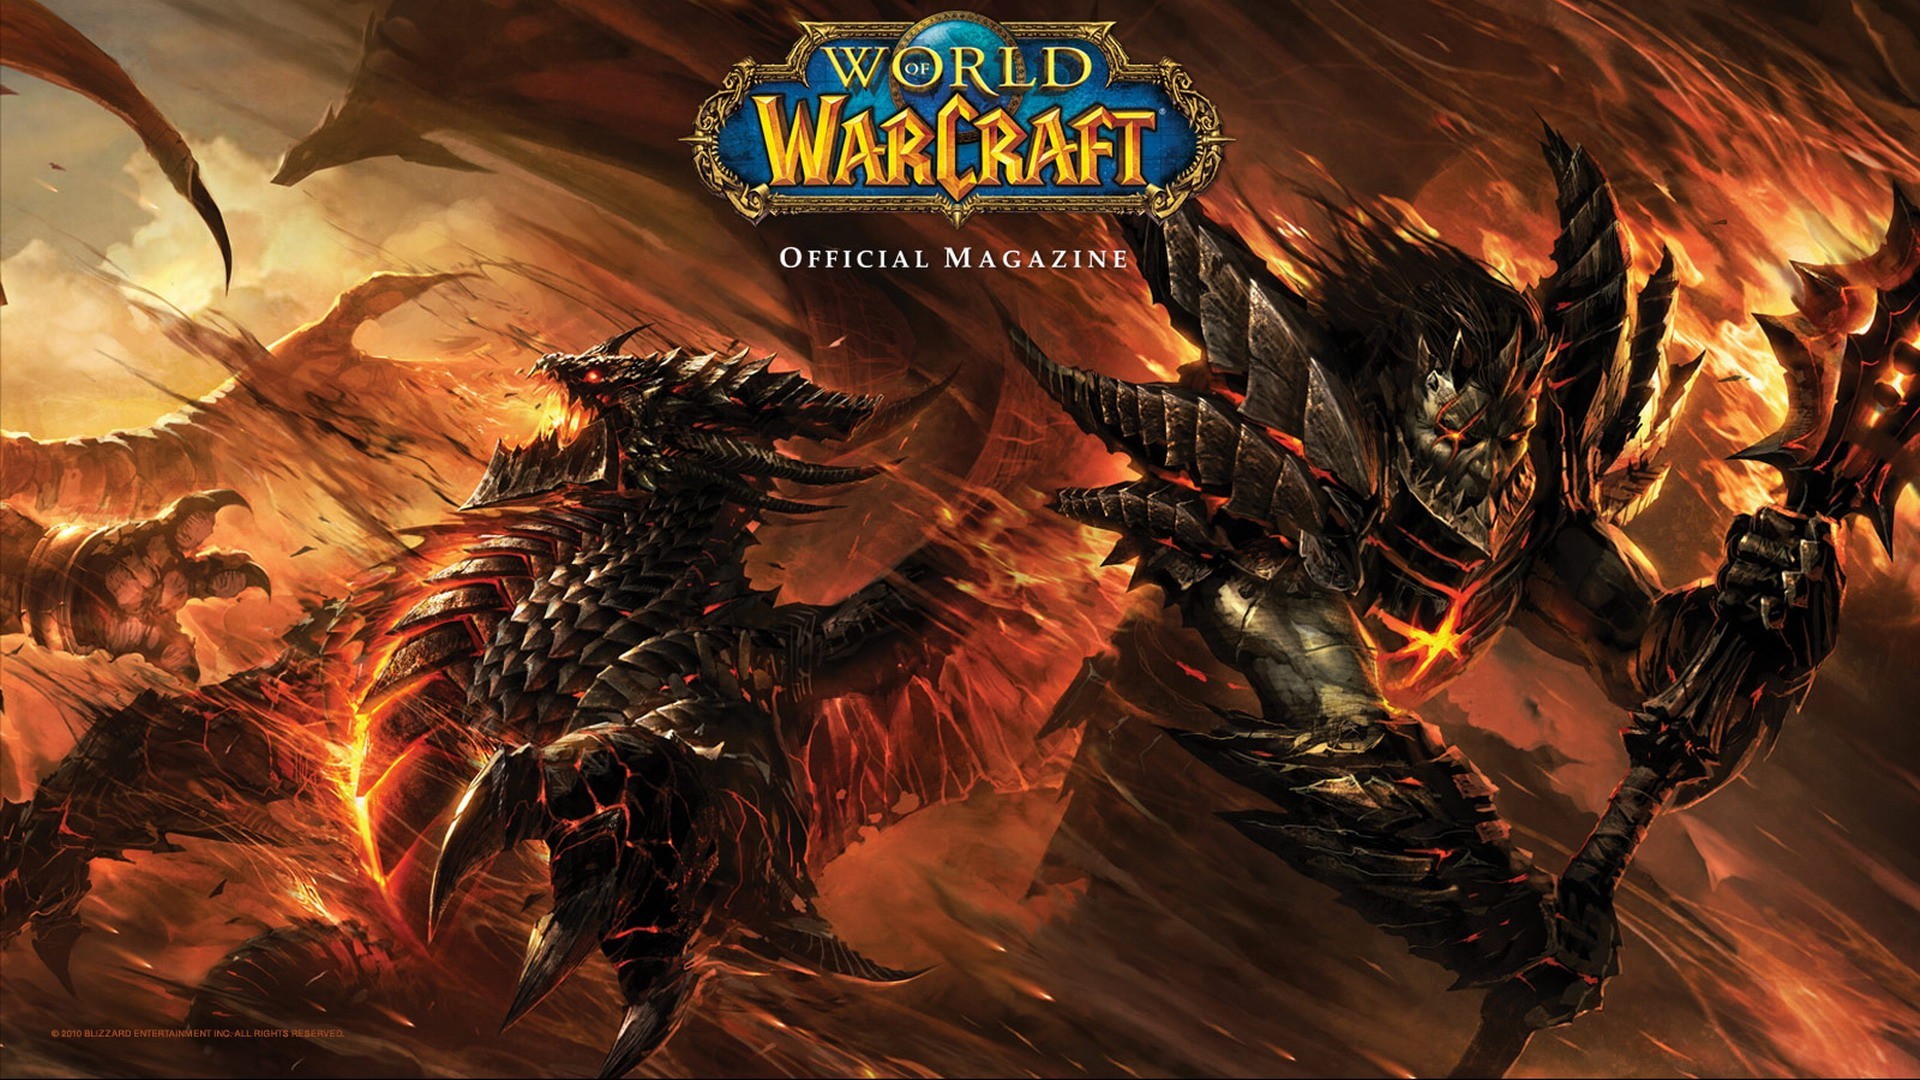 General 1920x1080 video games World of Warcraft fantasy art PC gaming video game art 2010 (Year)